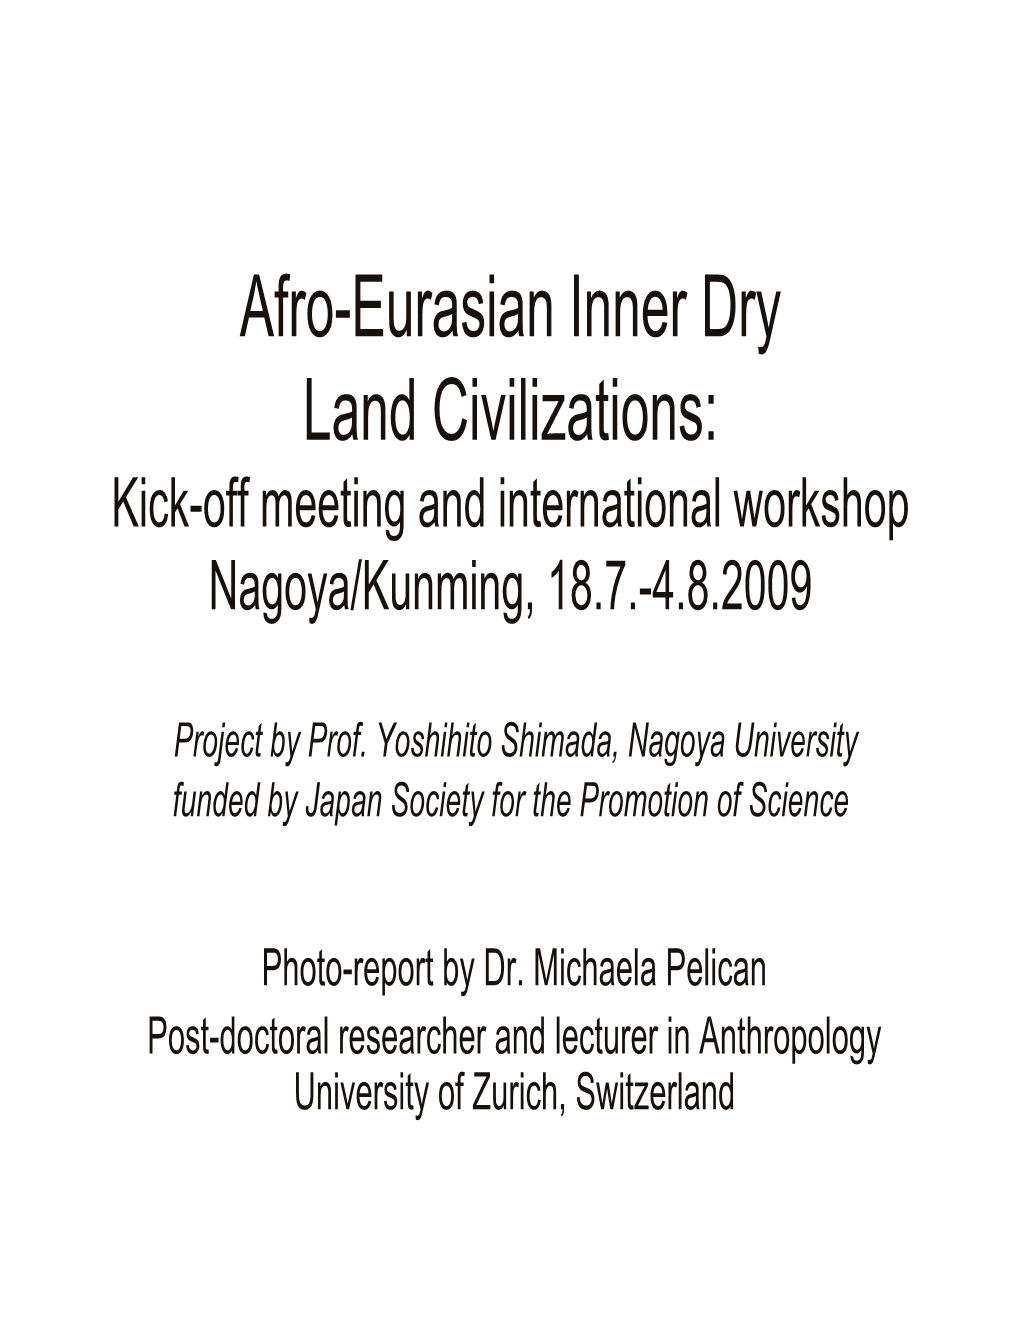 Afro-Eurasian Inner Dry Land Civilizations: Kick-Off Meeting and International Workshop Nagoya/Kunming, 18.7.-4.8.2009